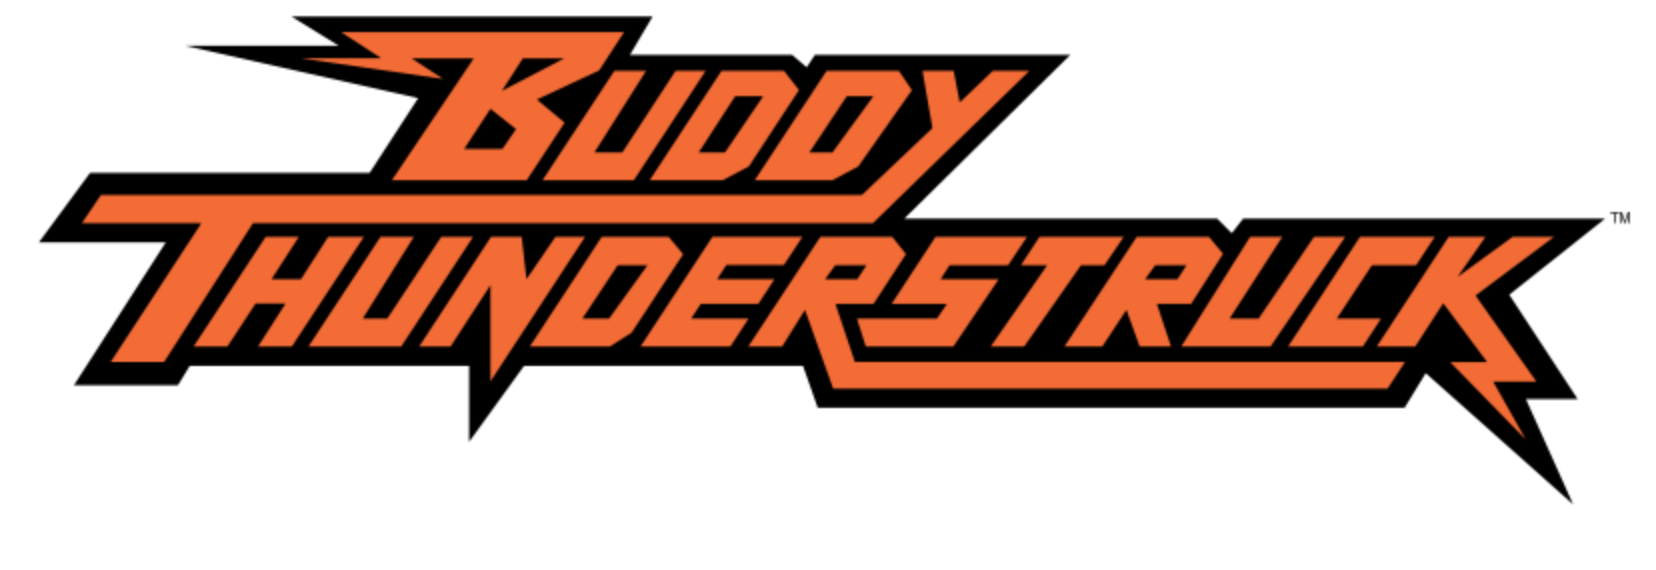 Buddy Thunderstruck 